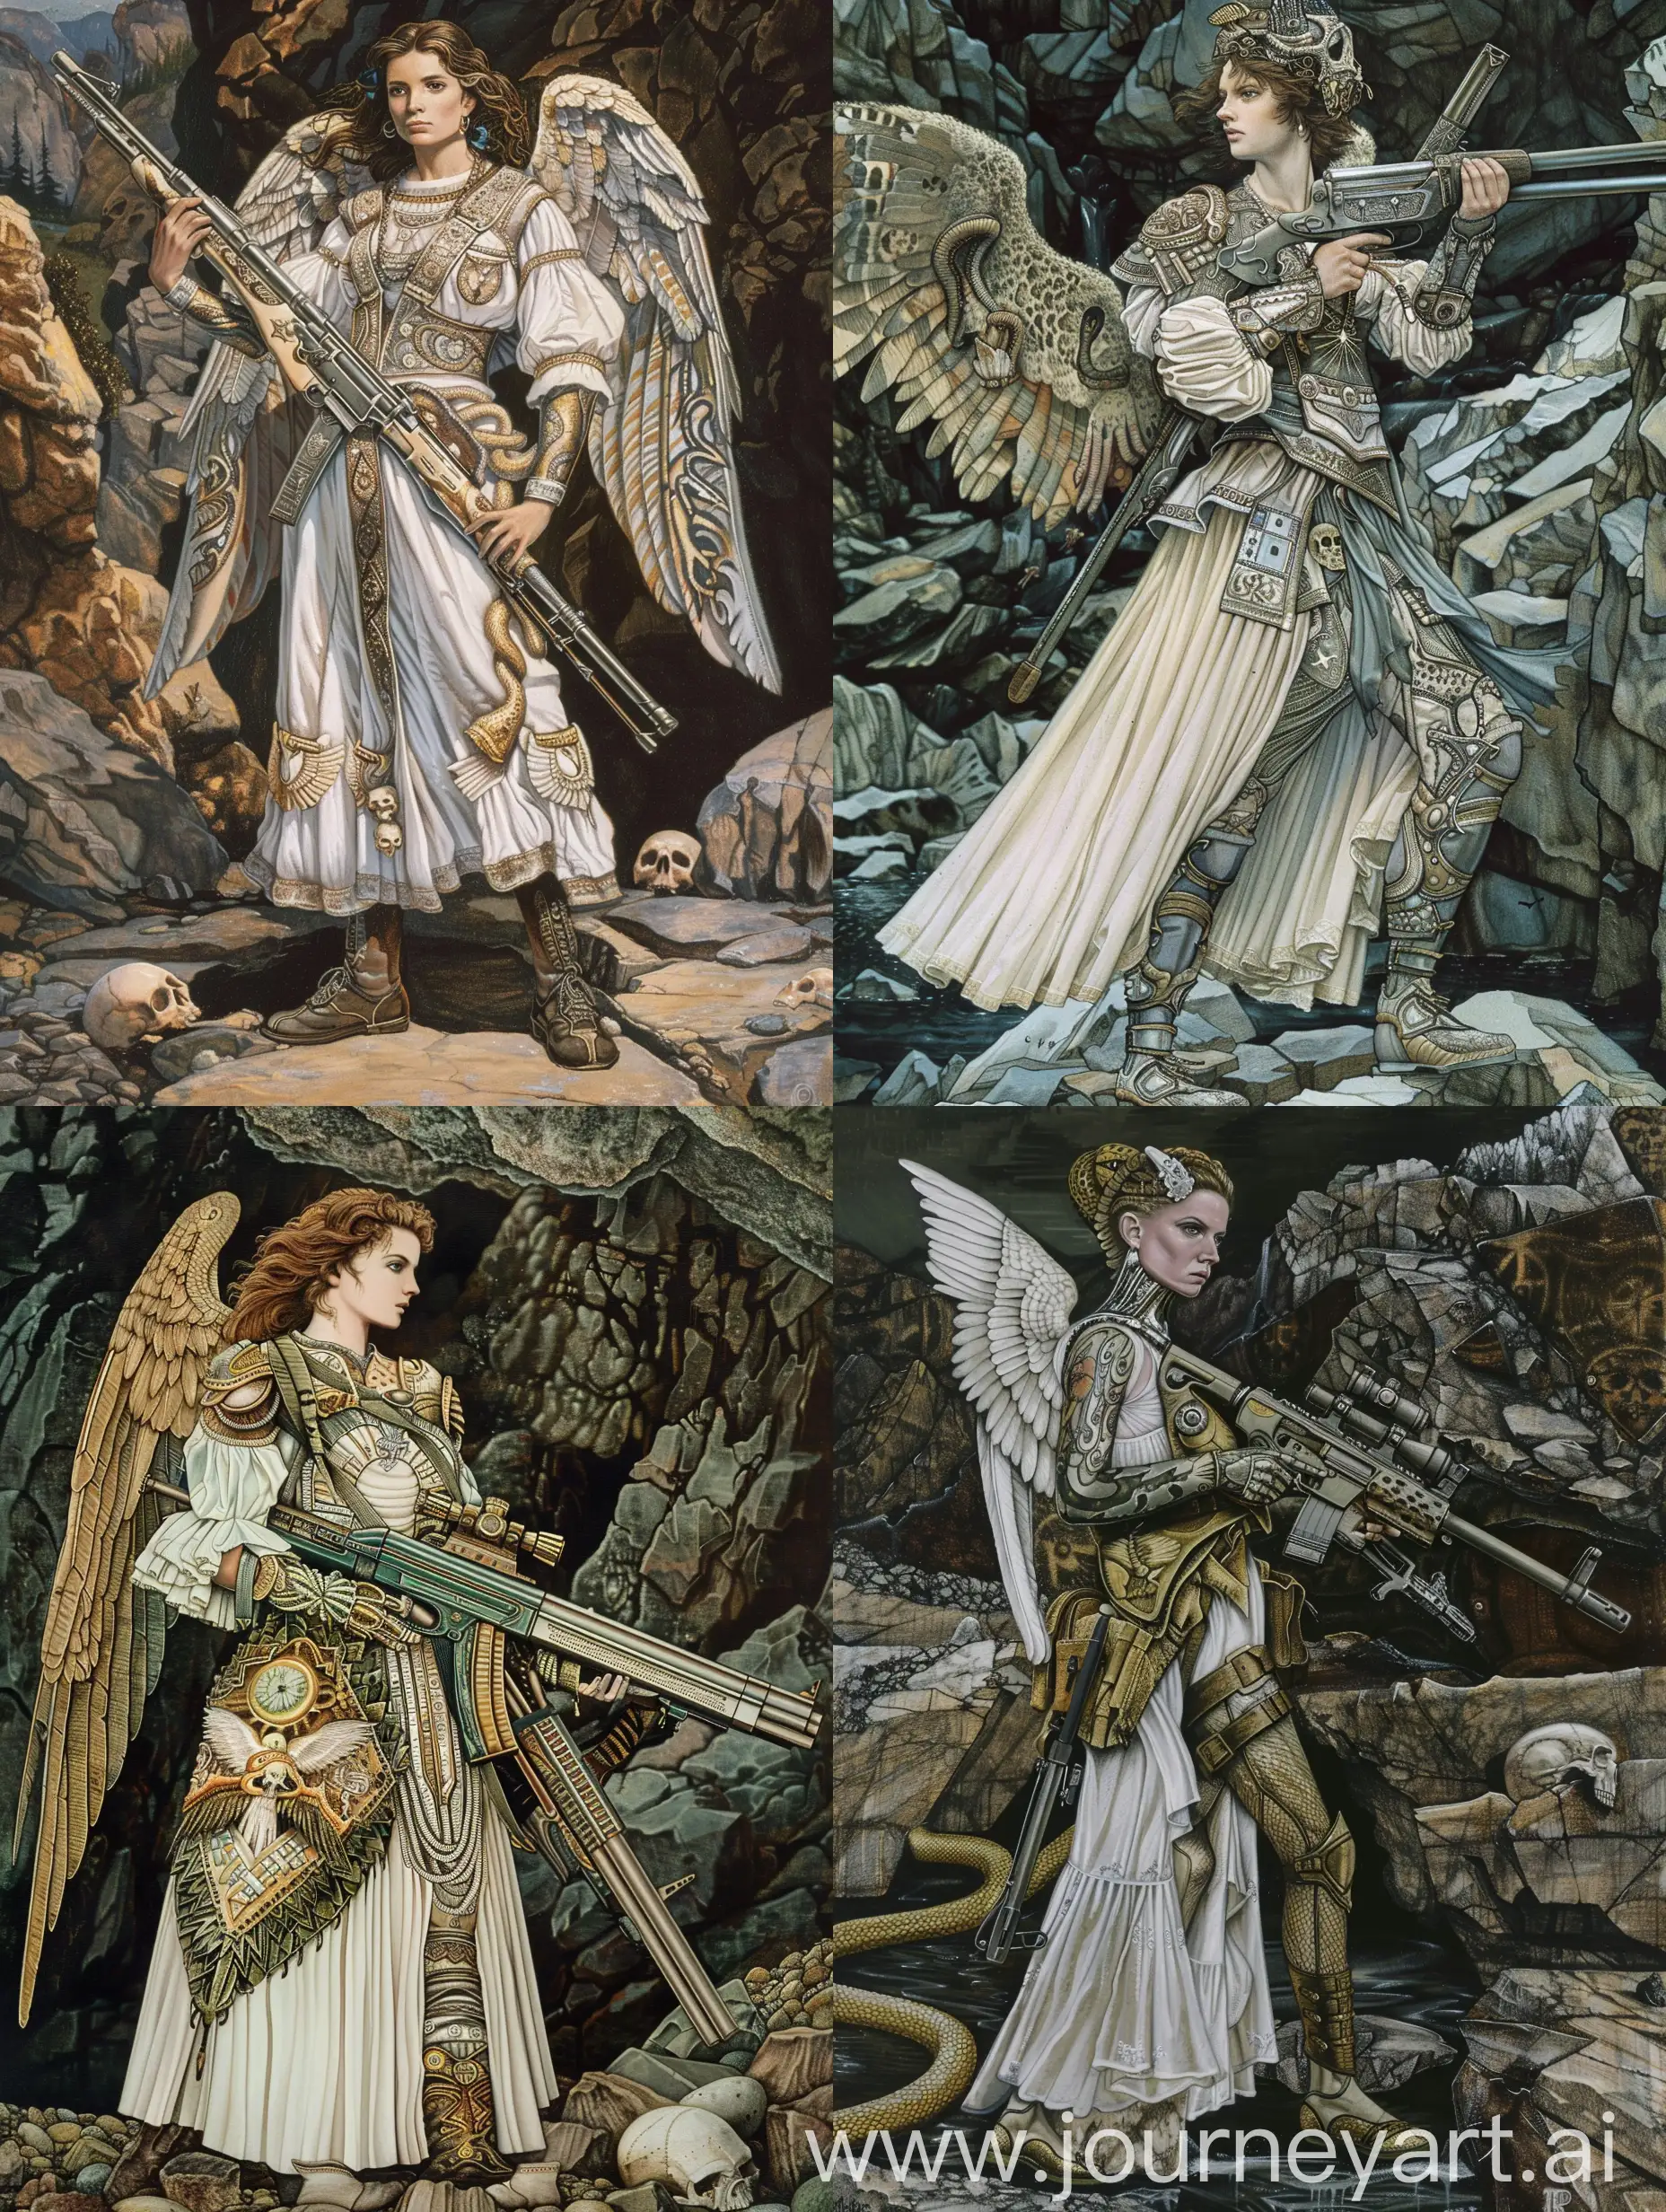 Edward-BurneJones-Painting-of-Futuristic-Female-Angel-Warriors-with-SciFi-Ornate-Clothing-and-Kalashnikovs